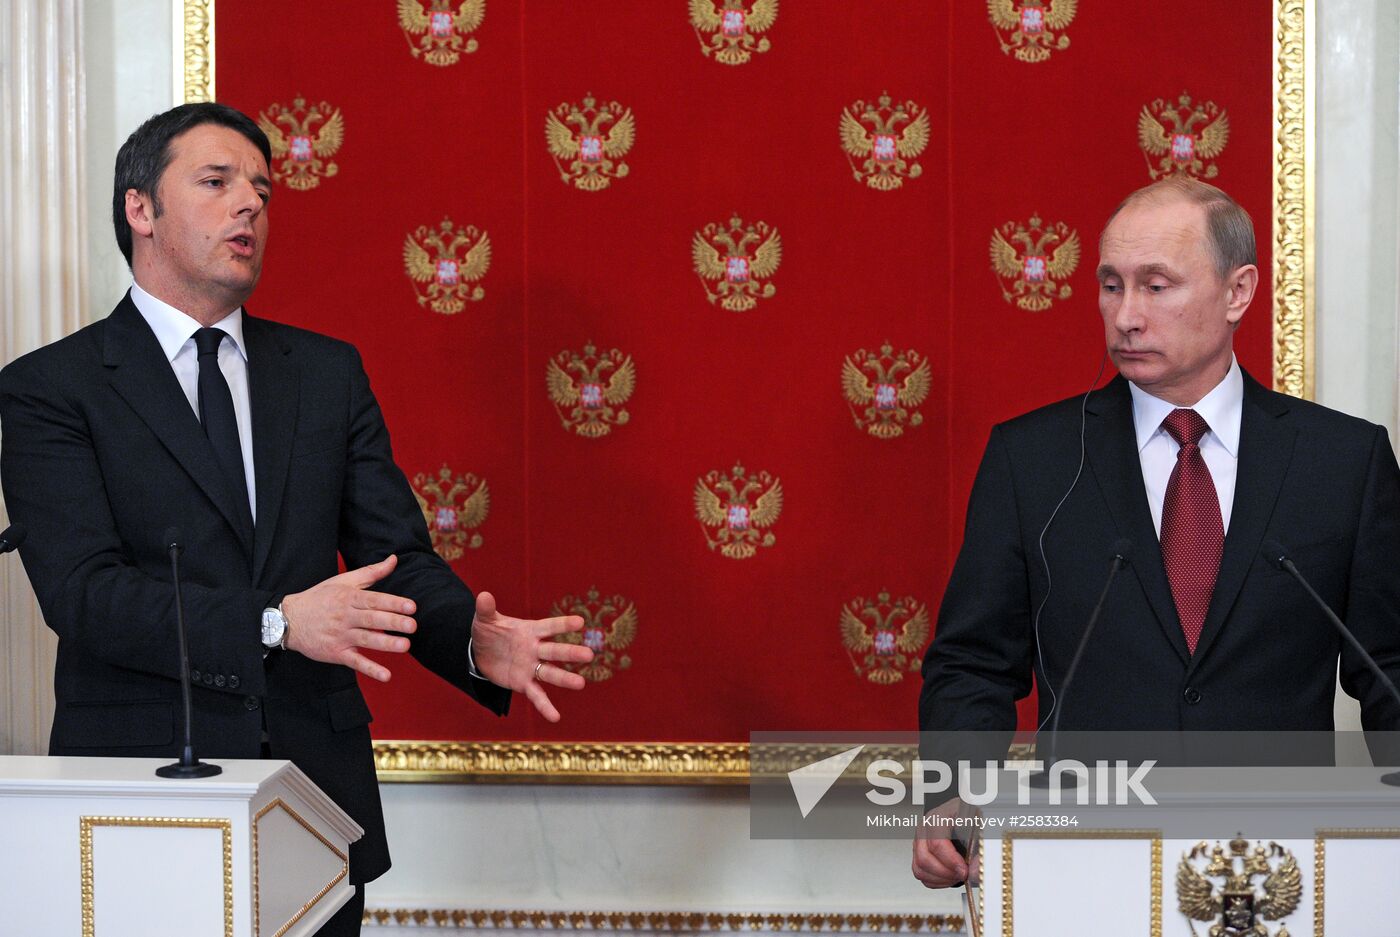 President Putin meets with Italian Prime Minister Matteo Renzi